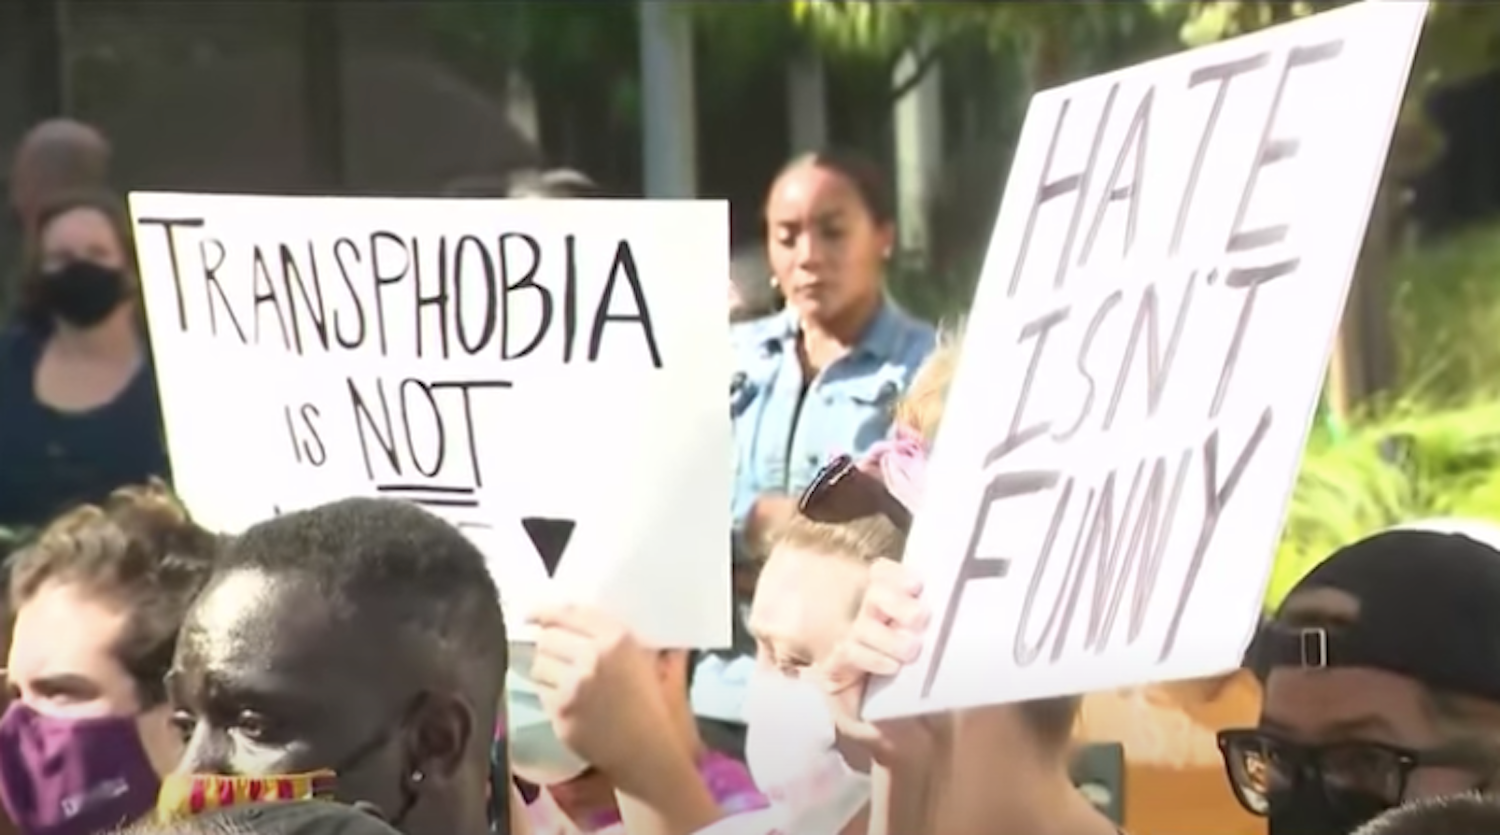 Netflix transgender walkout protest, Dave Chappelle The Closer transphobia